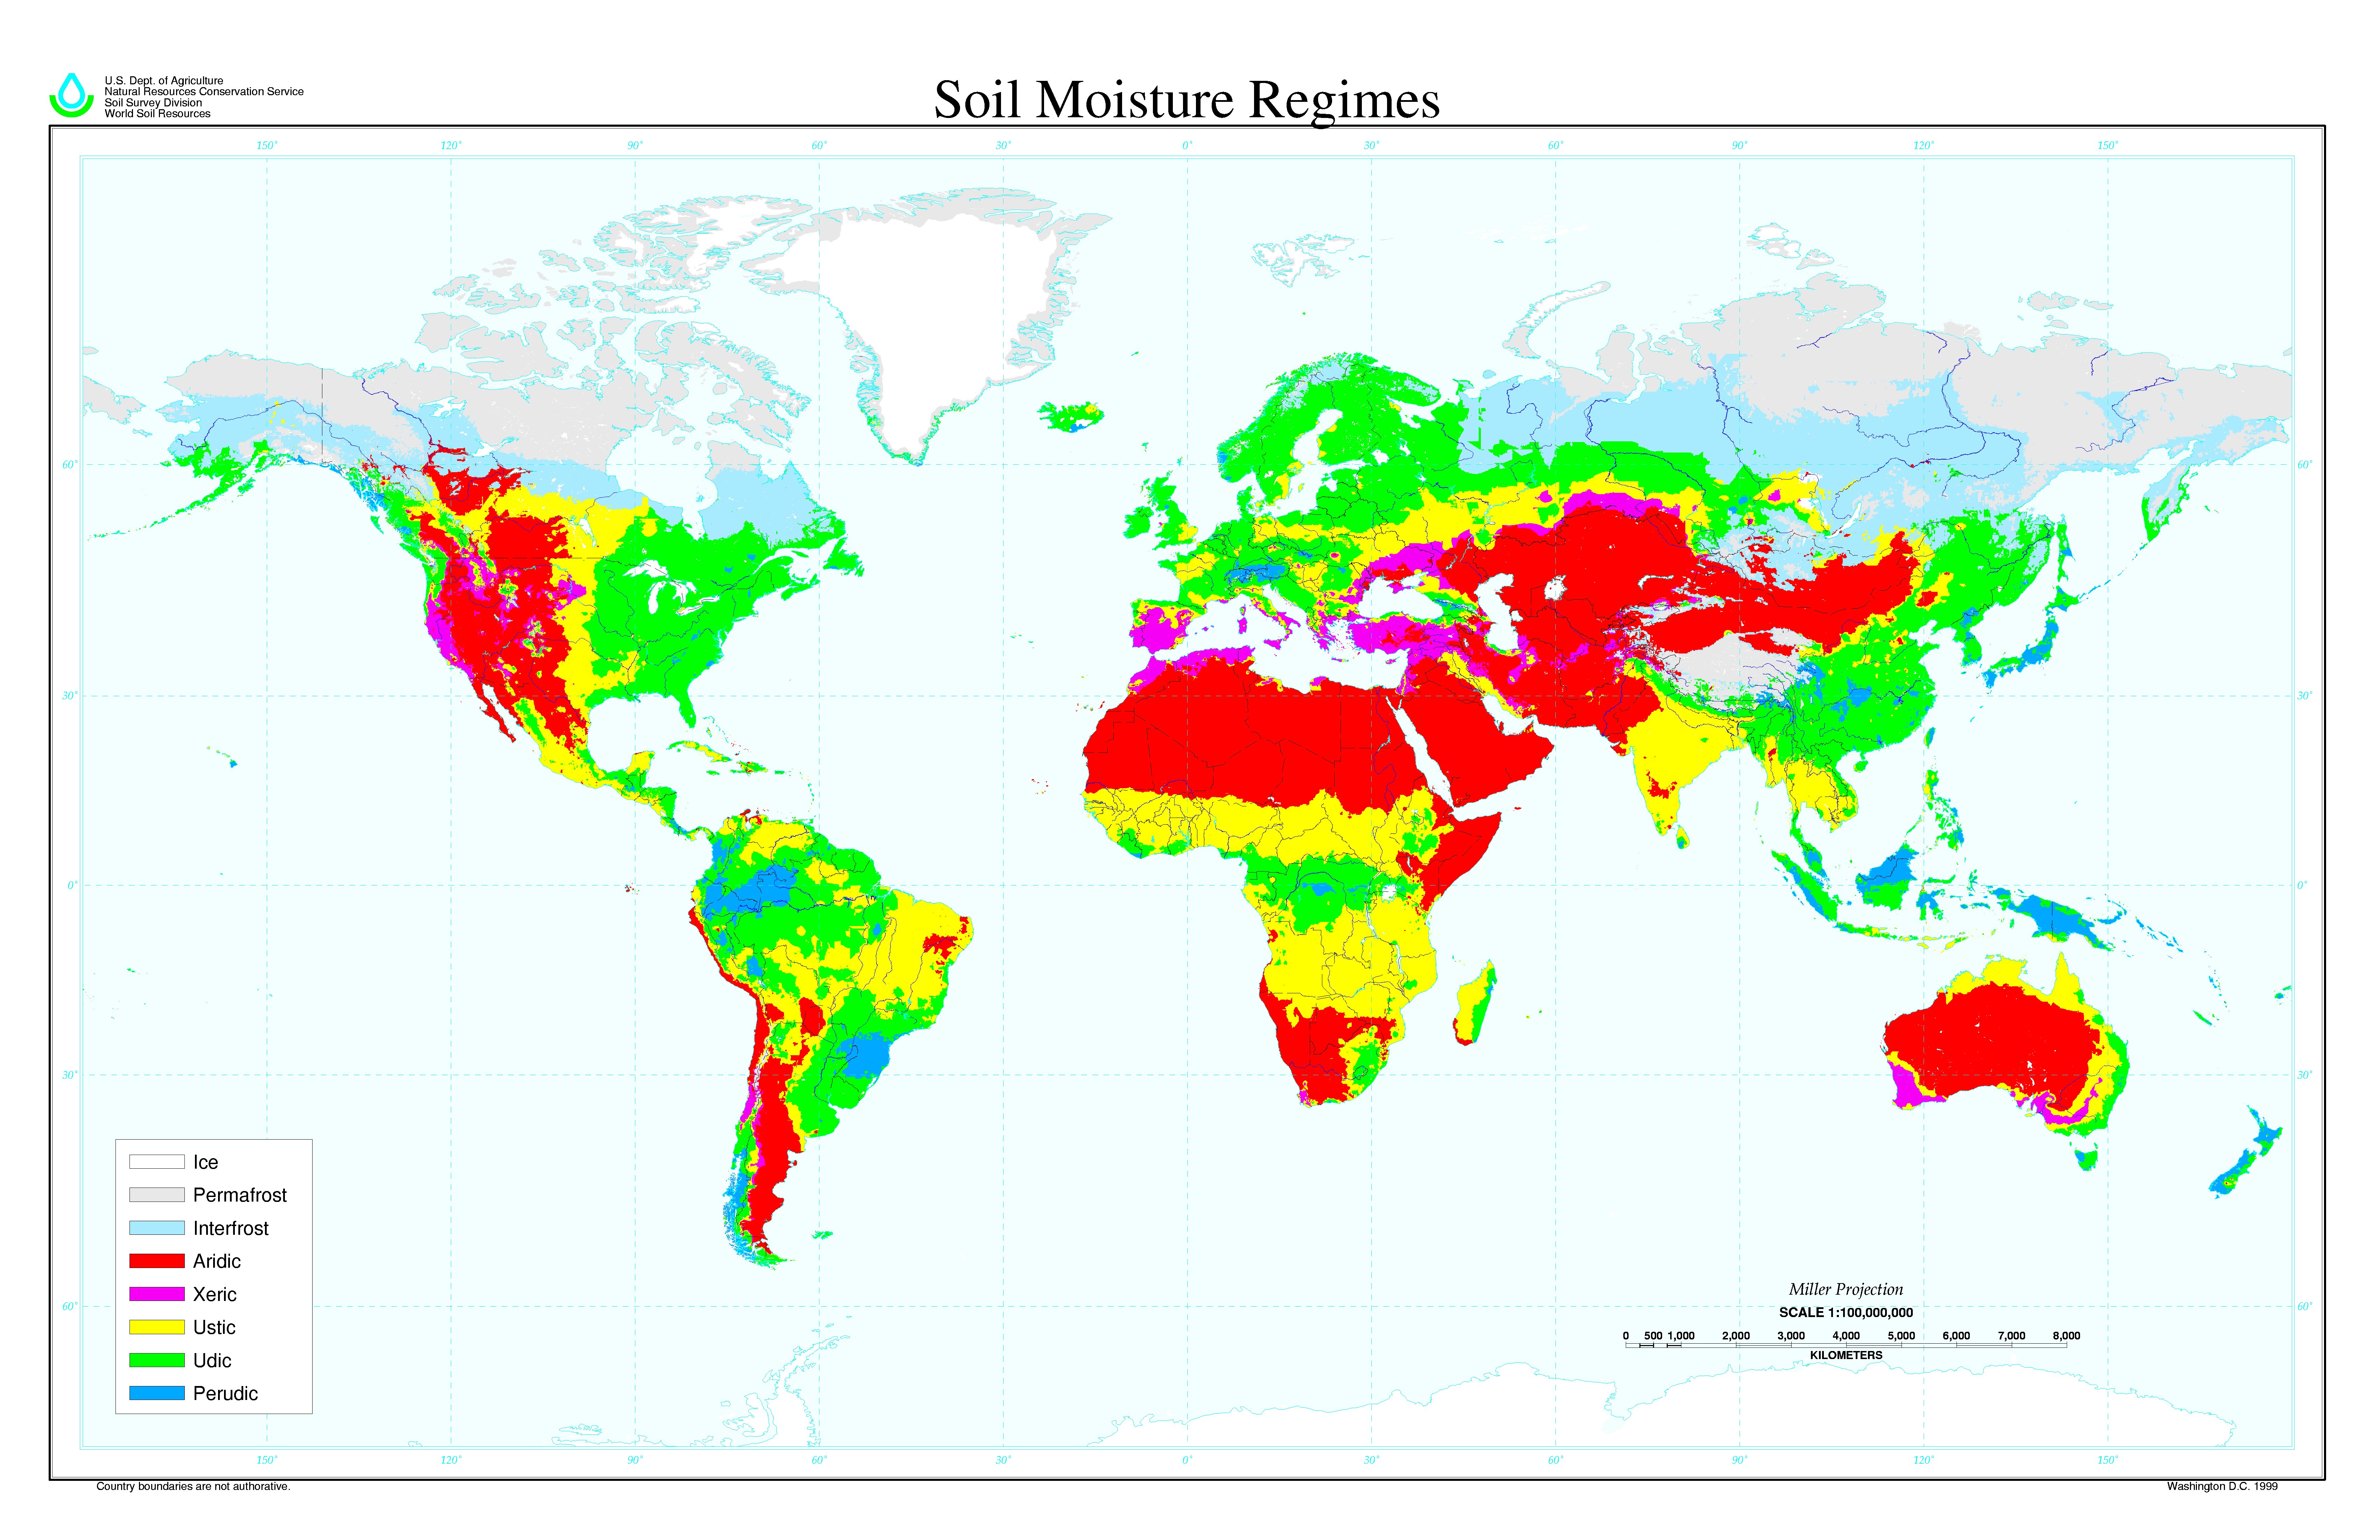 Map showing different soil moisture regimes around the world